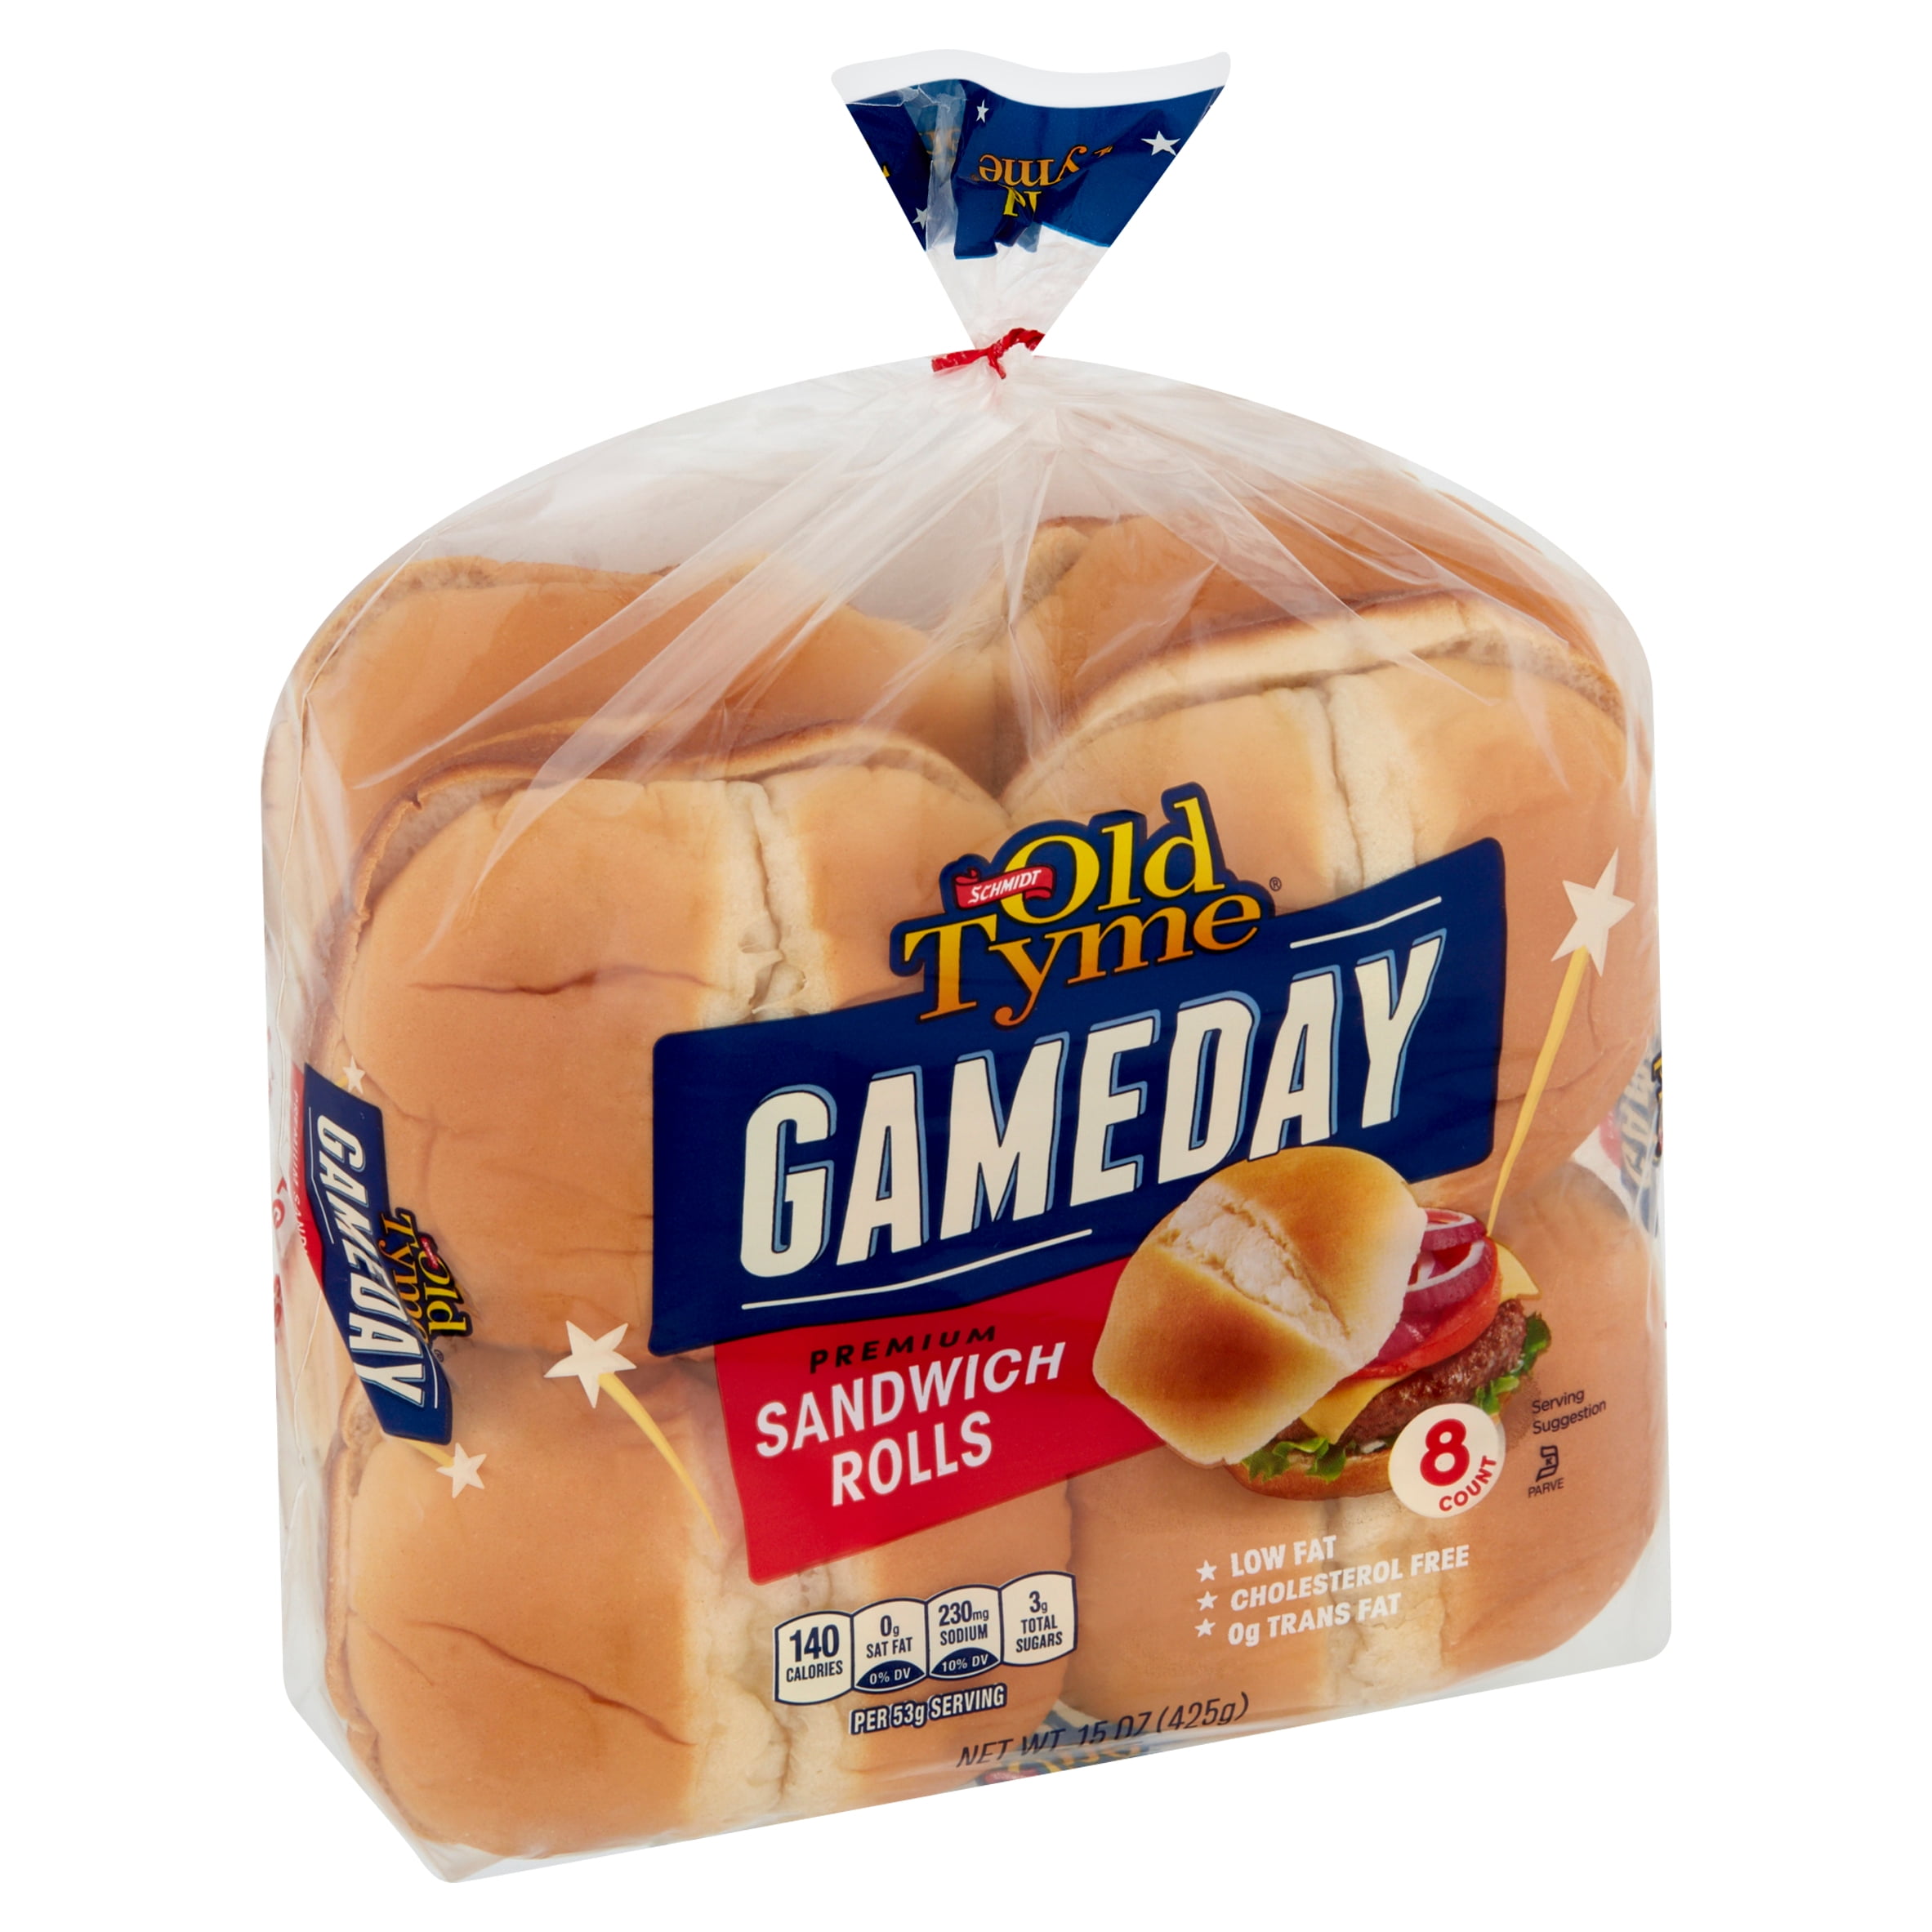 Schmidt Old Tyme Gameday Premium Sandwich Rolls, 8 count, 15 oz